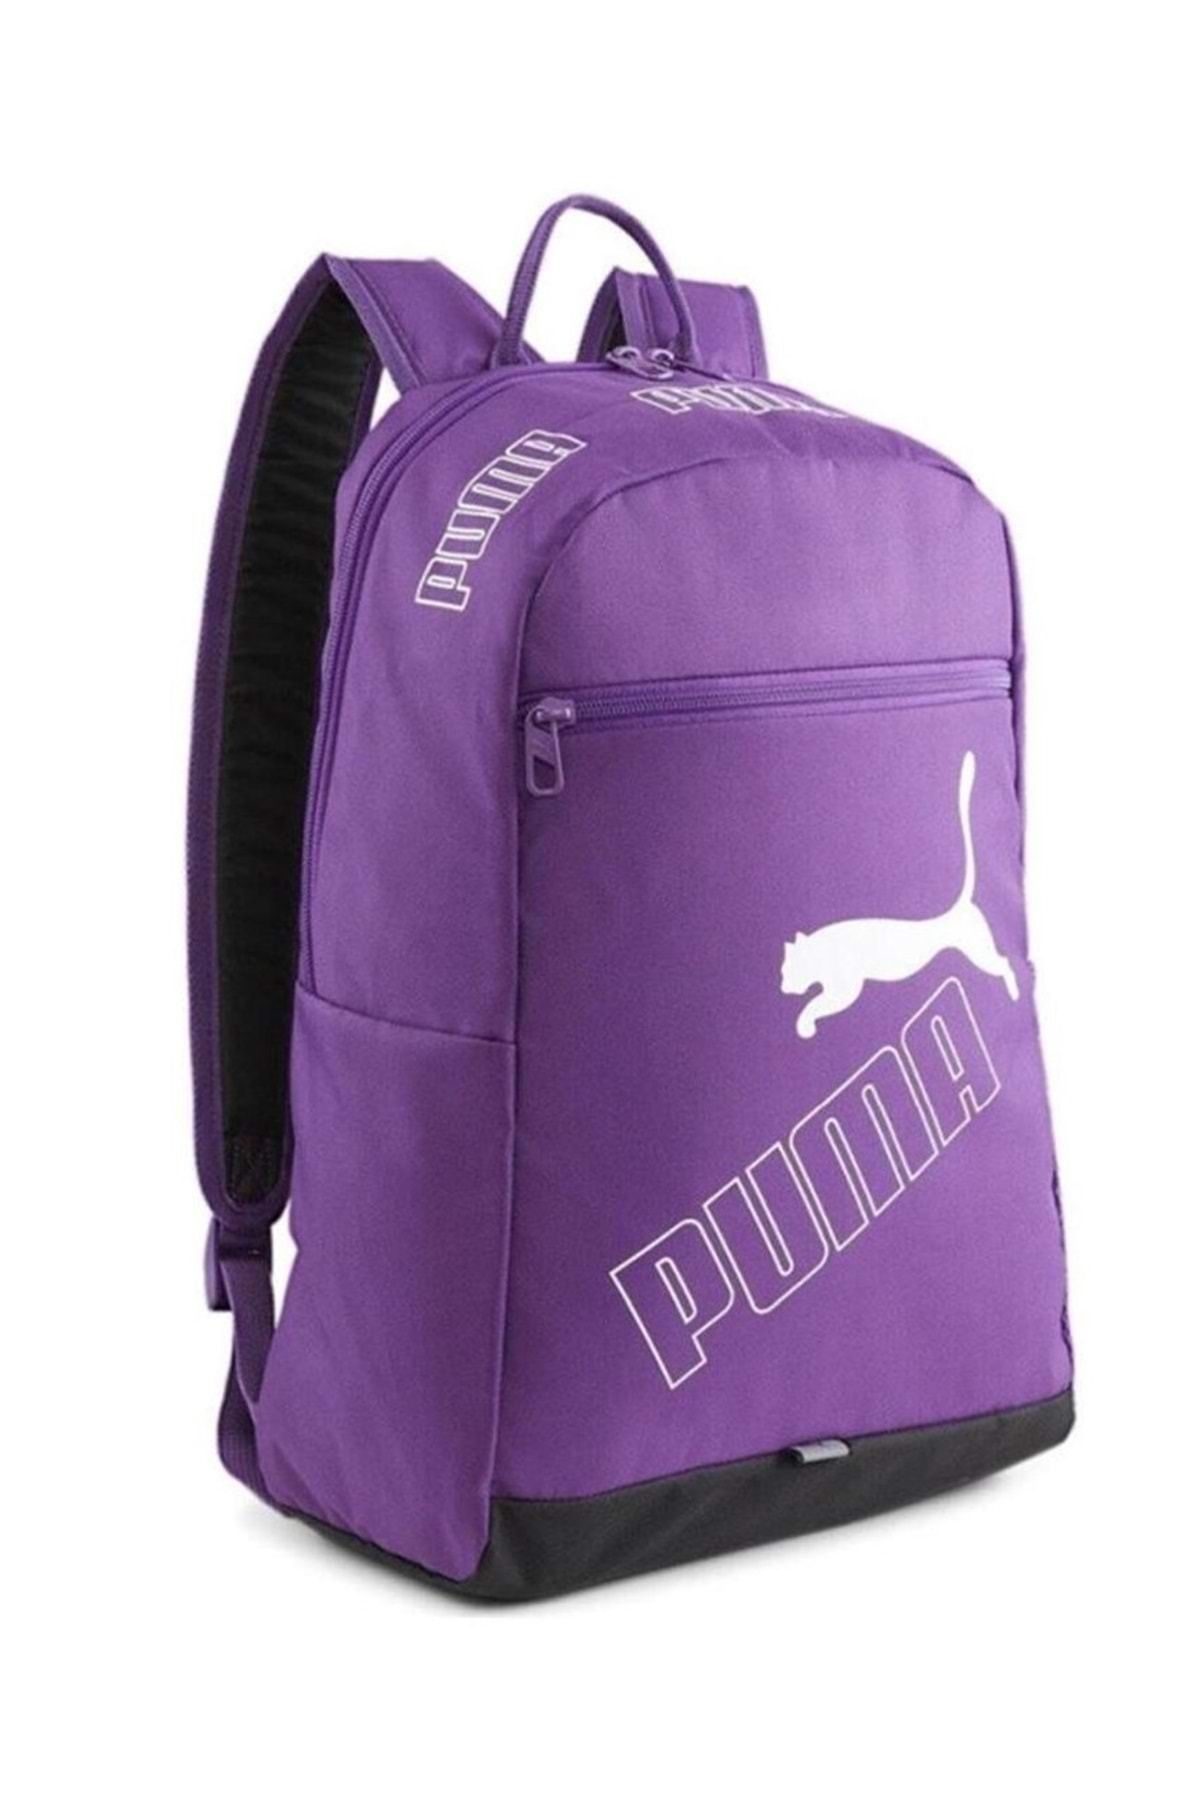 Puma Phase Backpack Iı 0772295-01 Unisex Sırt Çantası Mor